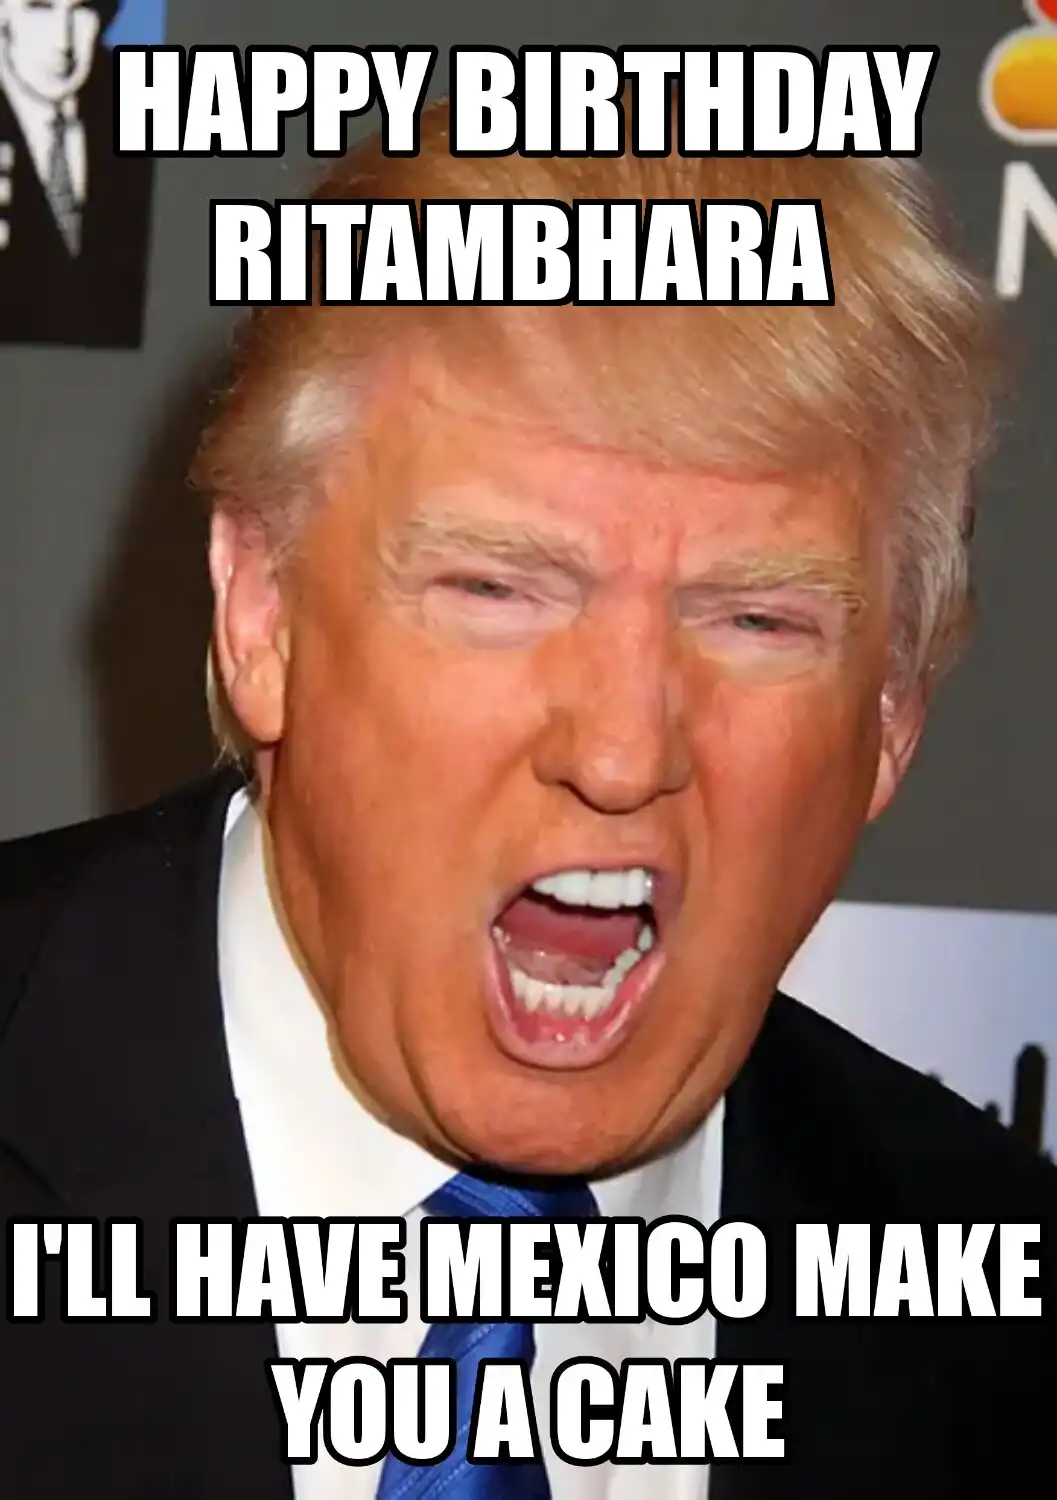 Happy Birthday Ritambhara Mexico Make You A Cake Meme